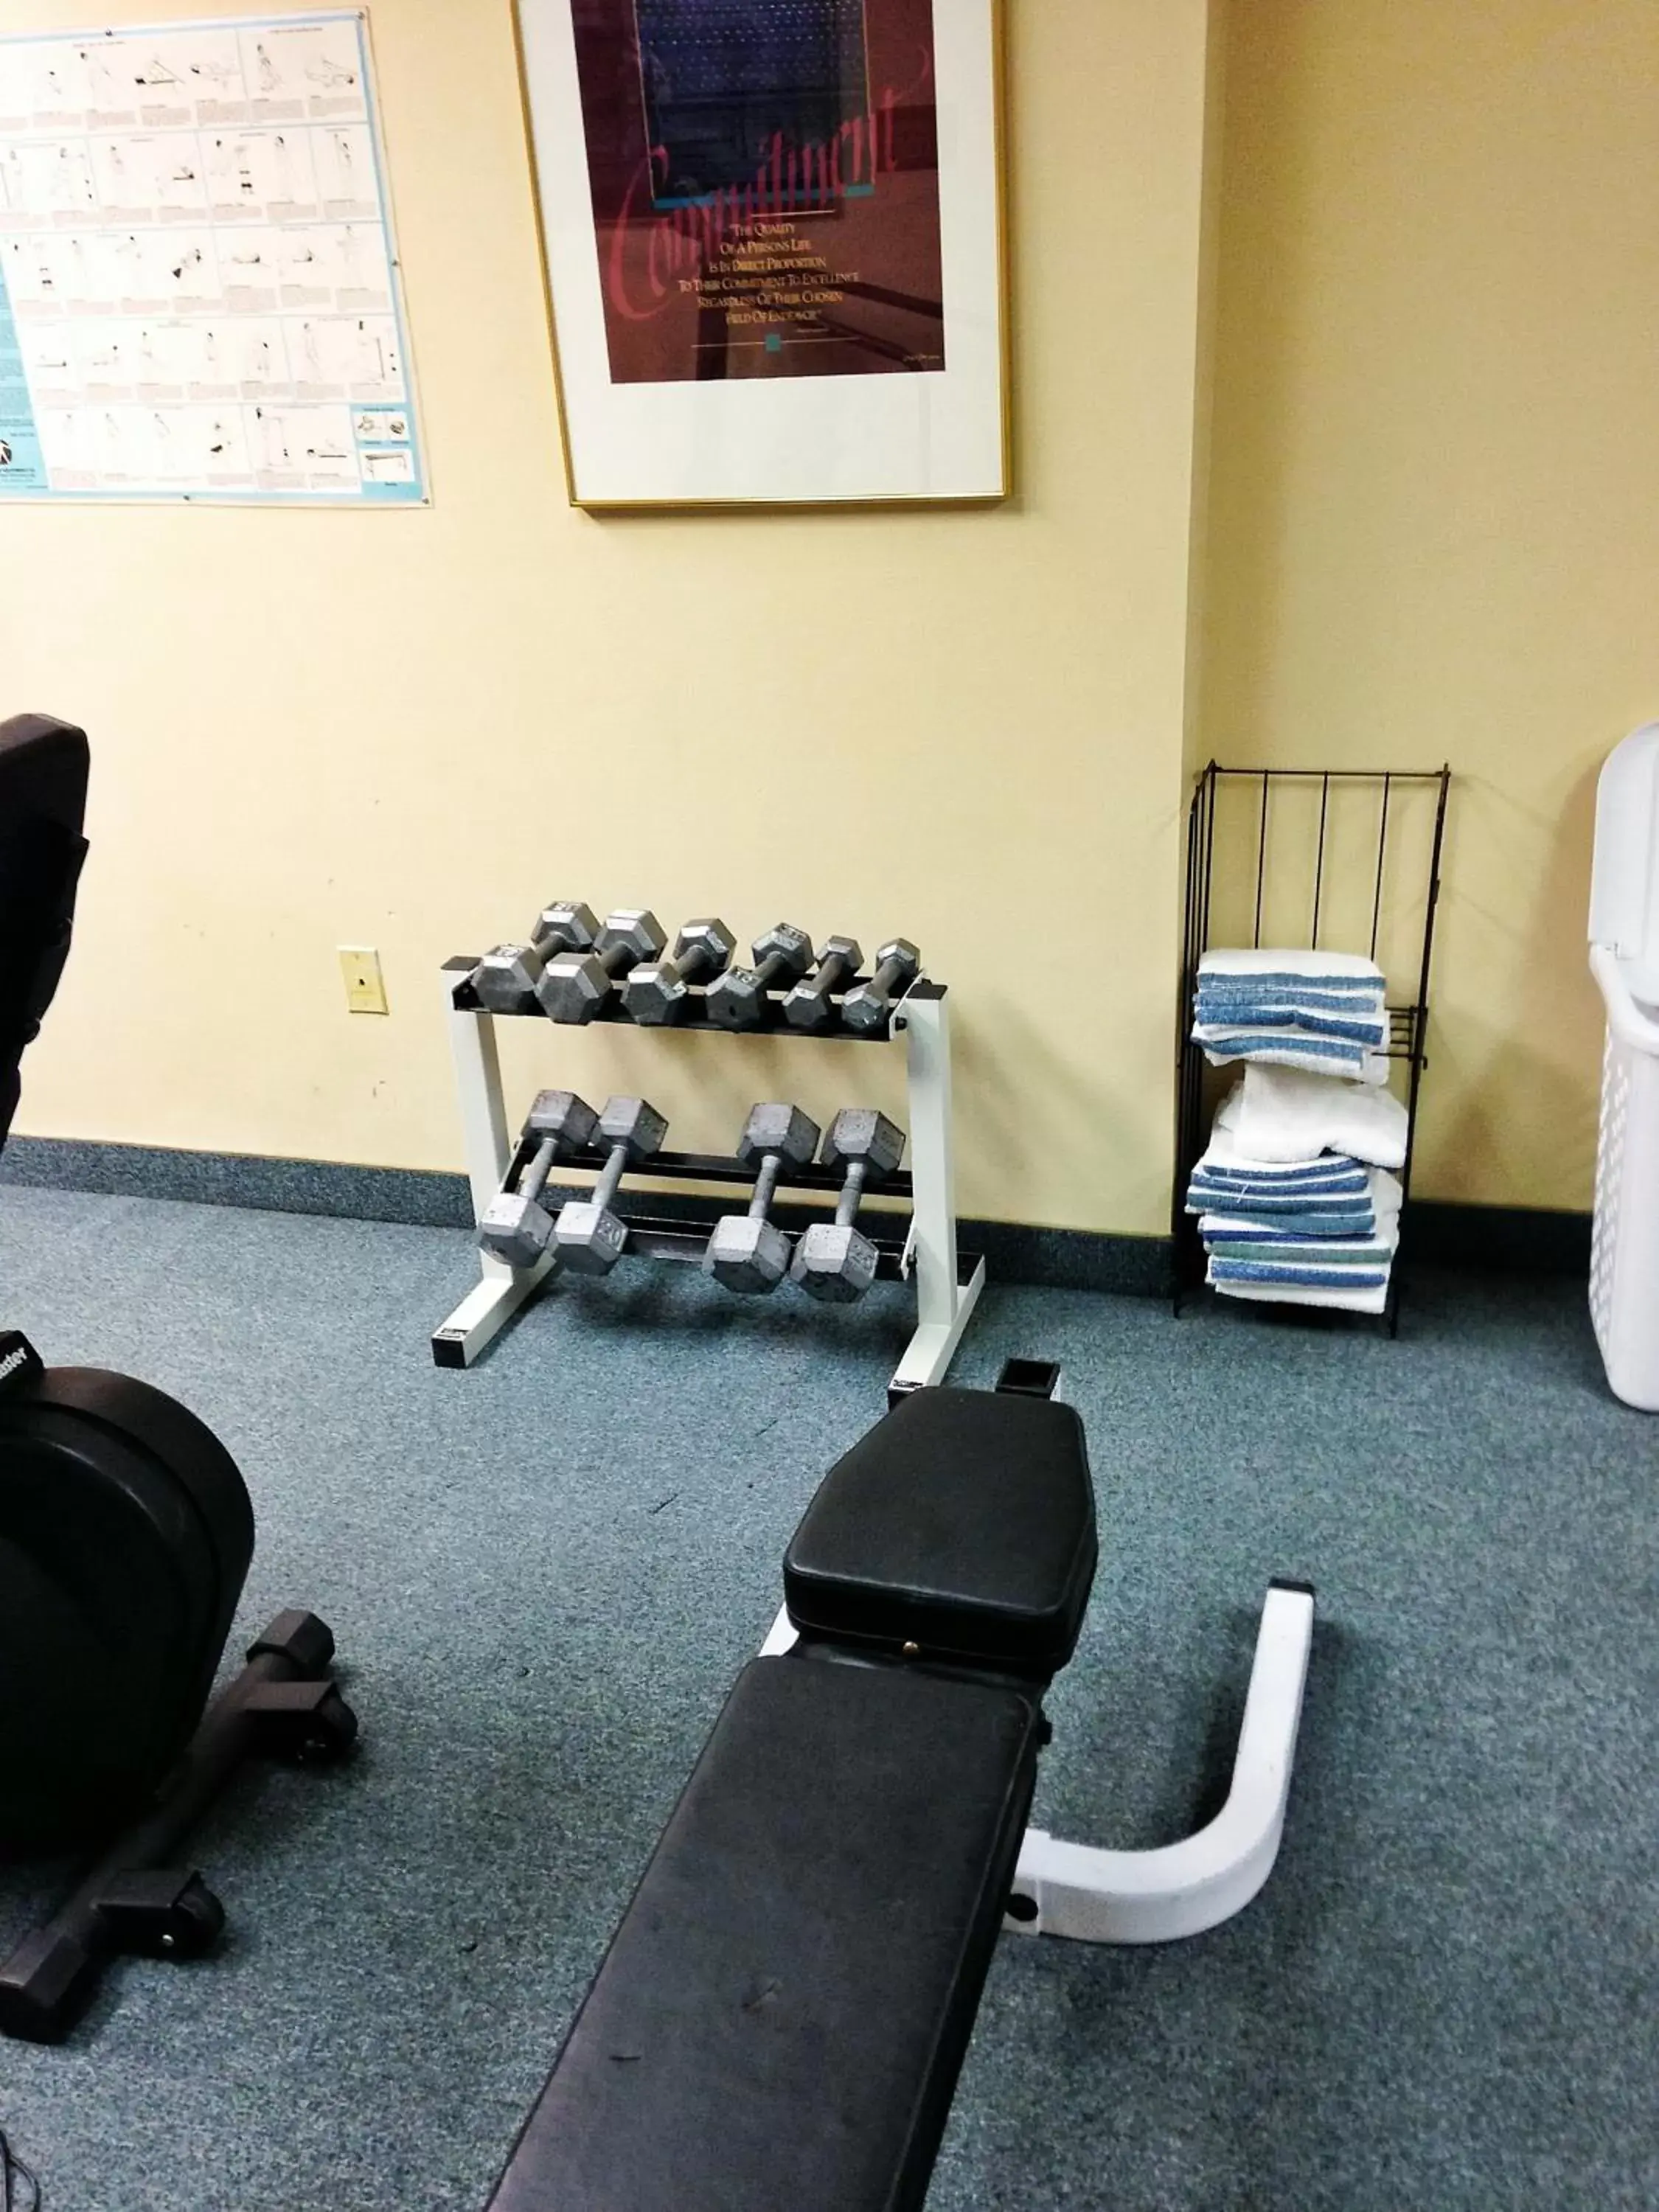 Fitness centre/facilities, Fitness Center/Facilities in Coast Wenatchee Center Hotel